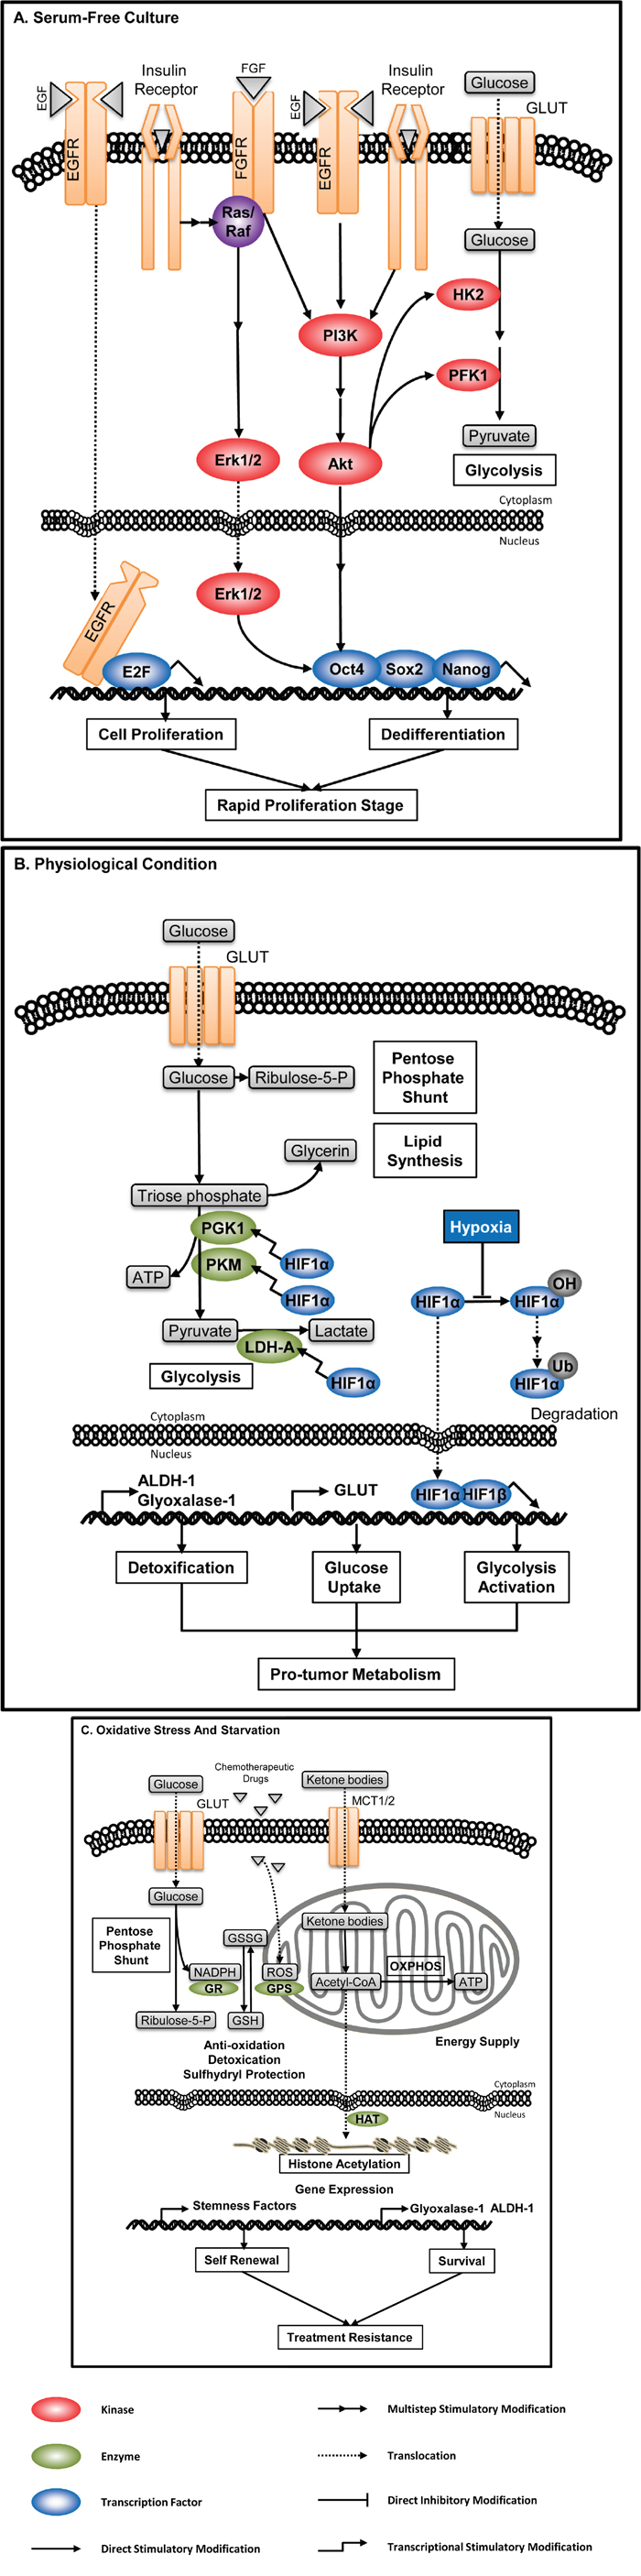 Enzyme-associated metabolic adaptation.